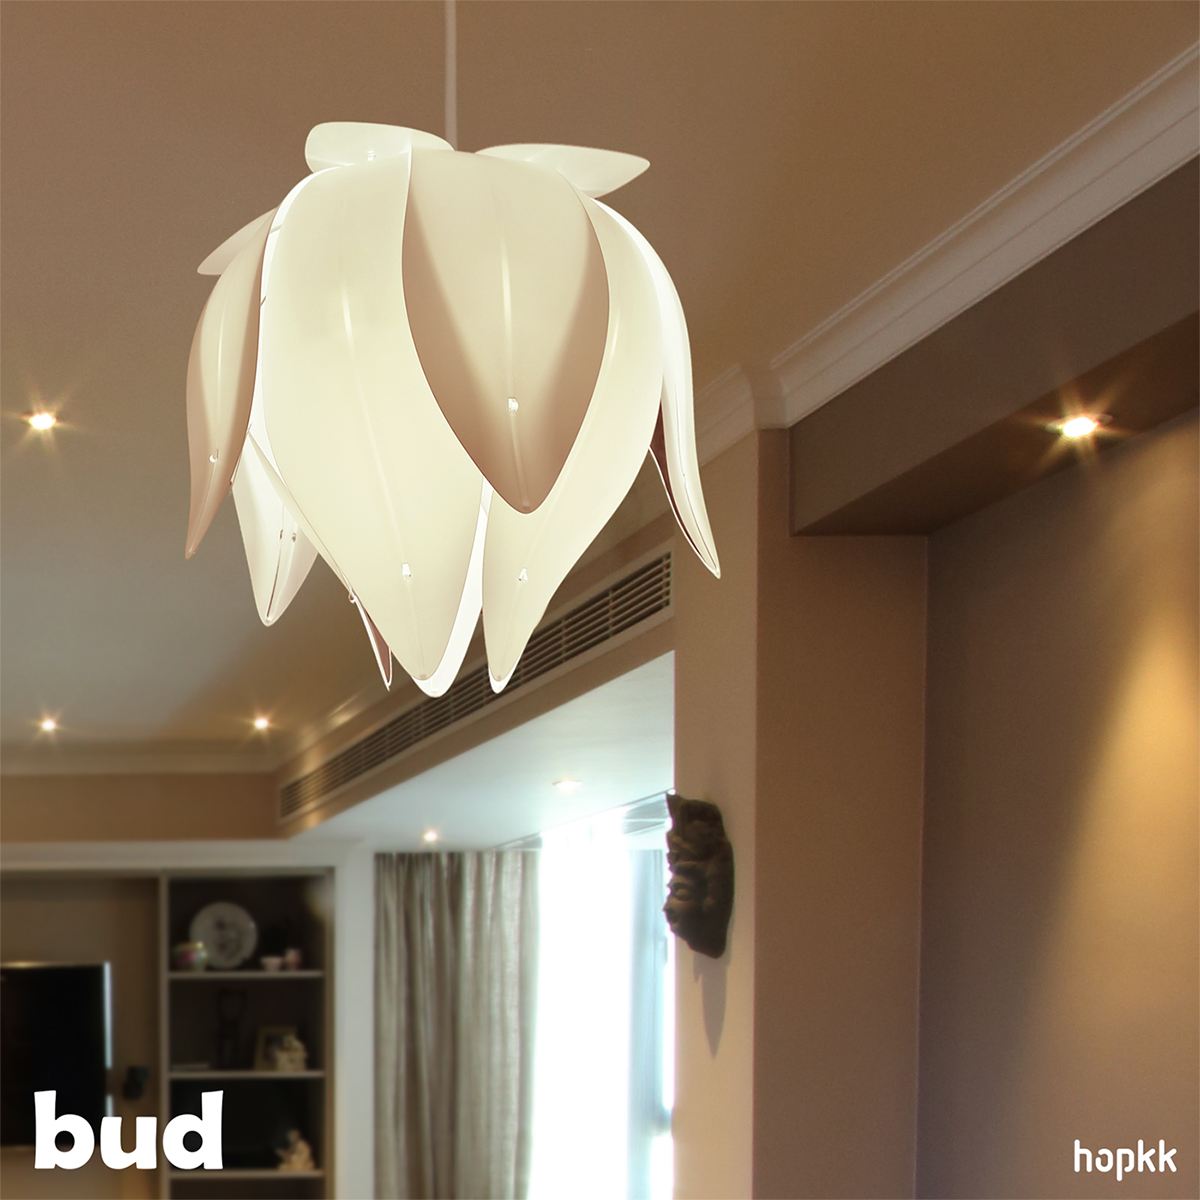 hopkk home decor contemporary lampshade lighting Lamp product furniture Interior light